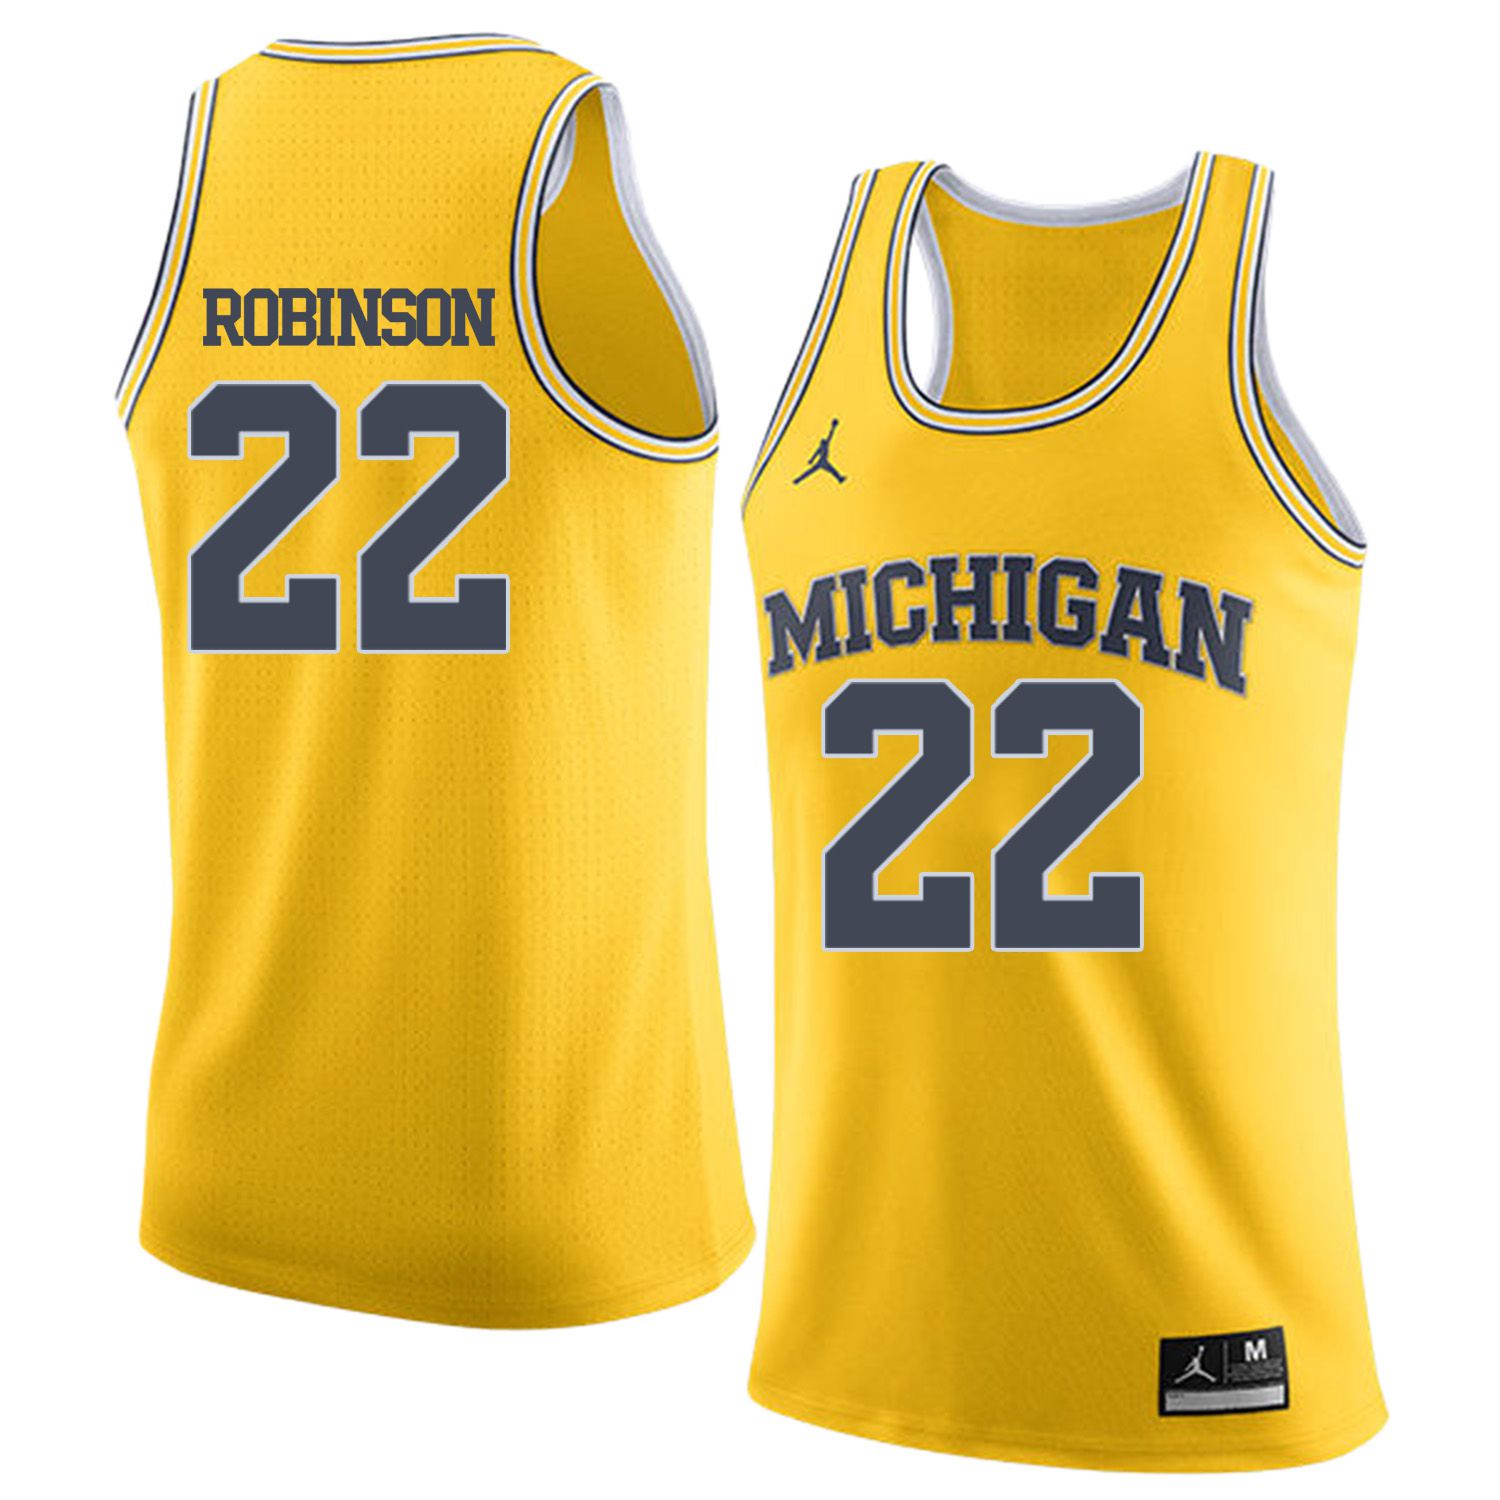 Men Jordan University of Michigan Basketball Yellow 22 Robinson Customized NCAA Jerseys